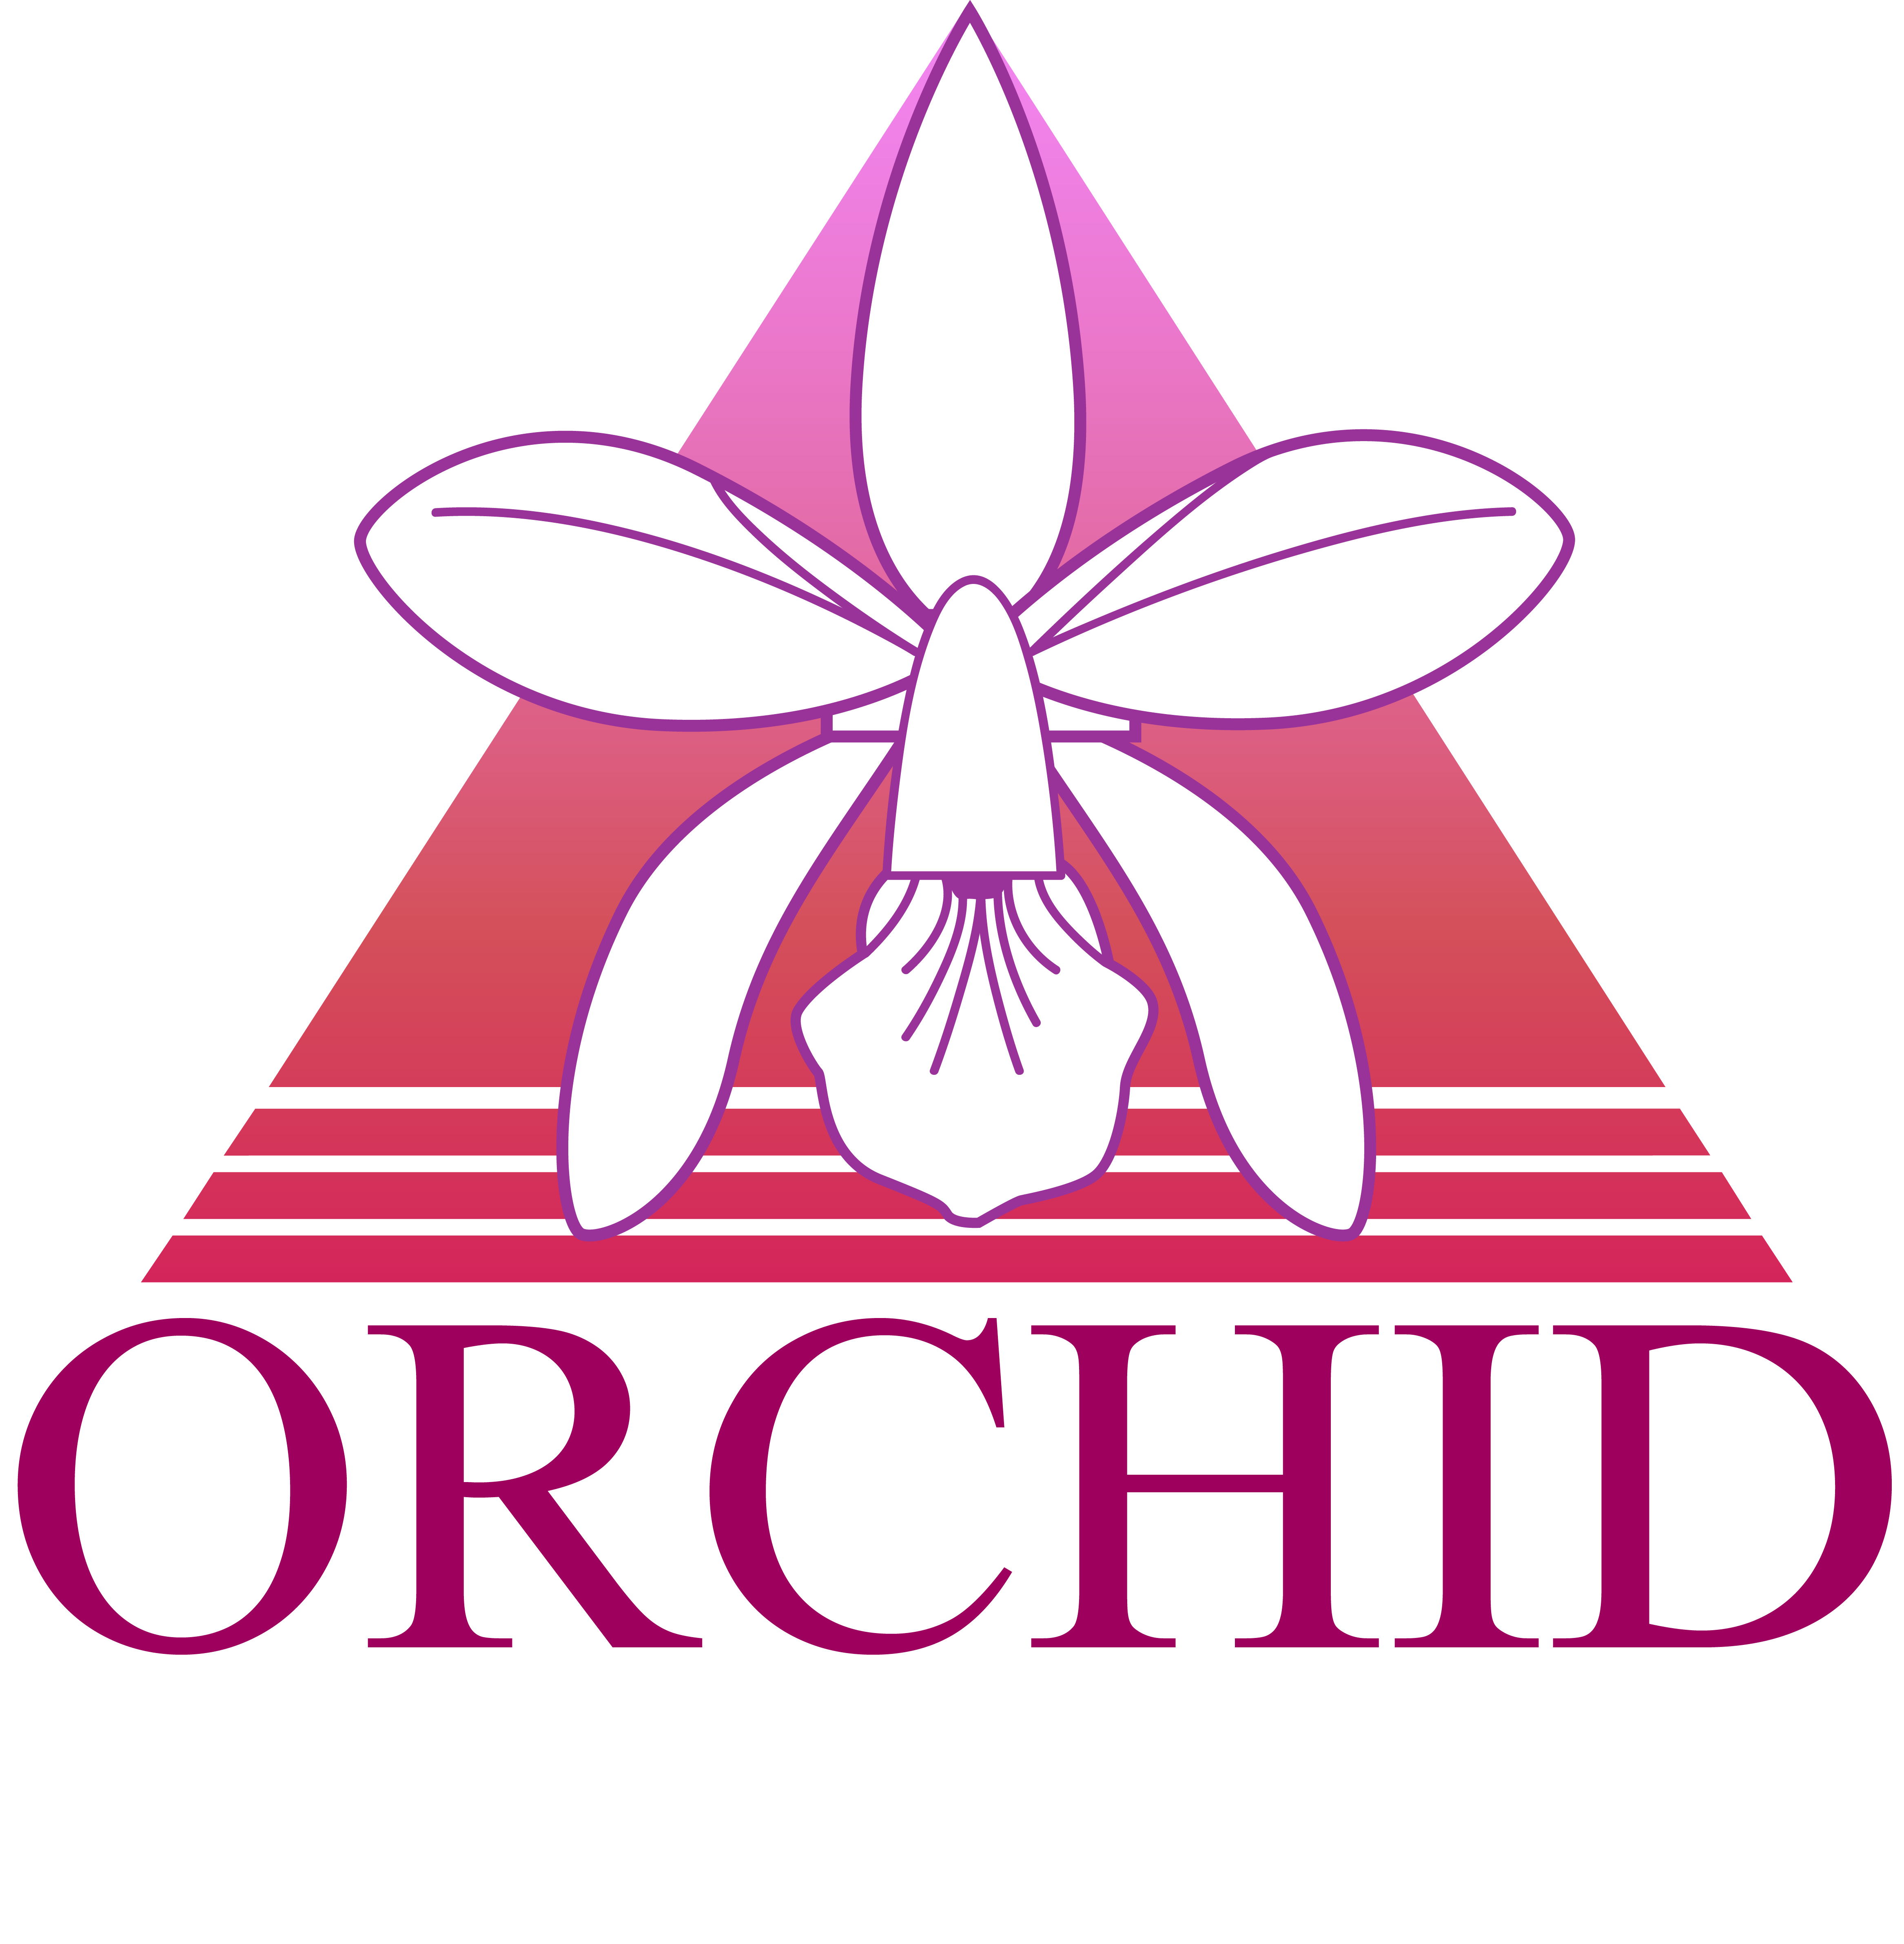 Technology clipart technology logo. Orchid album on imgur